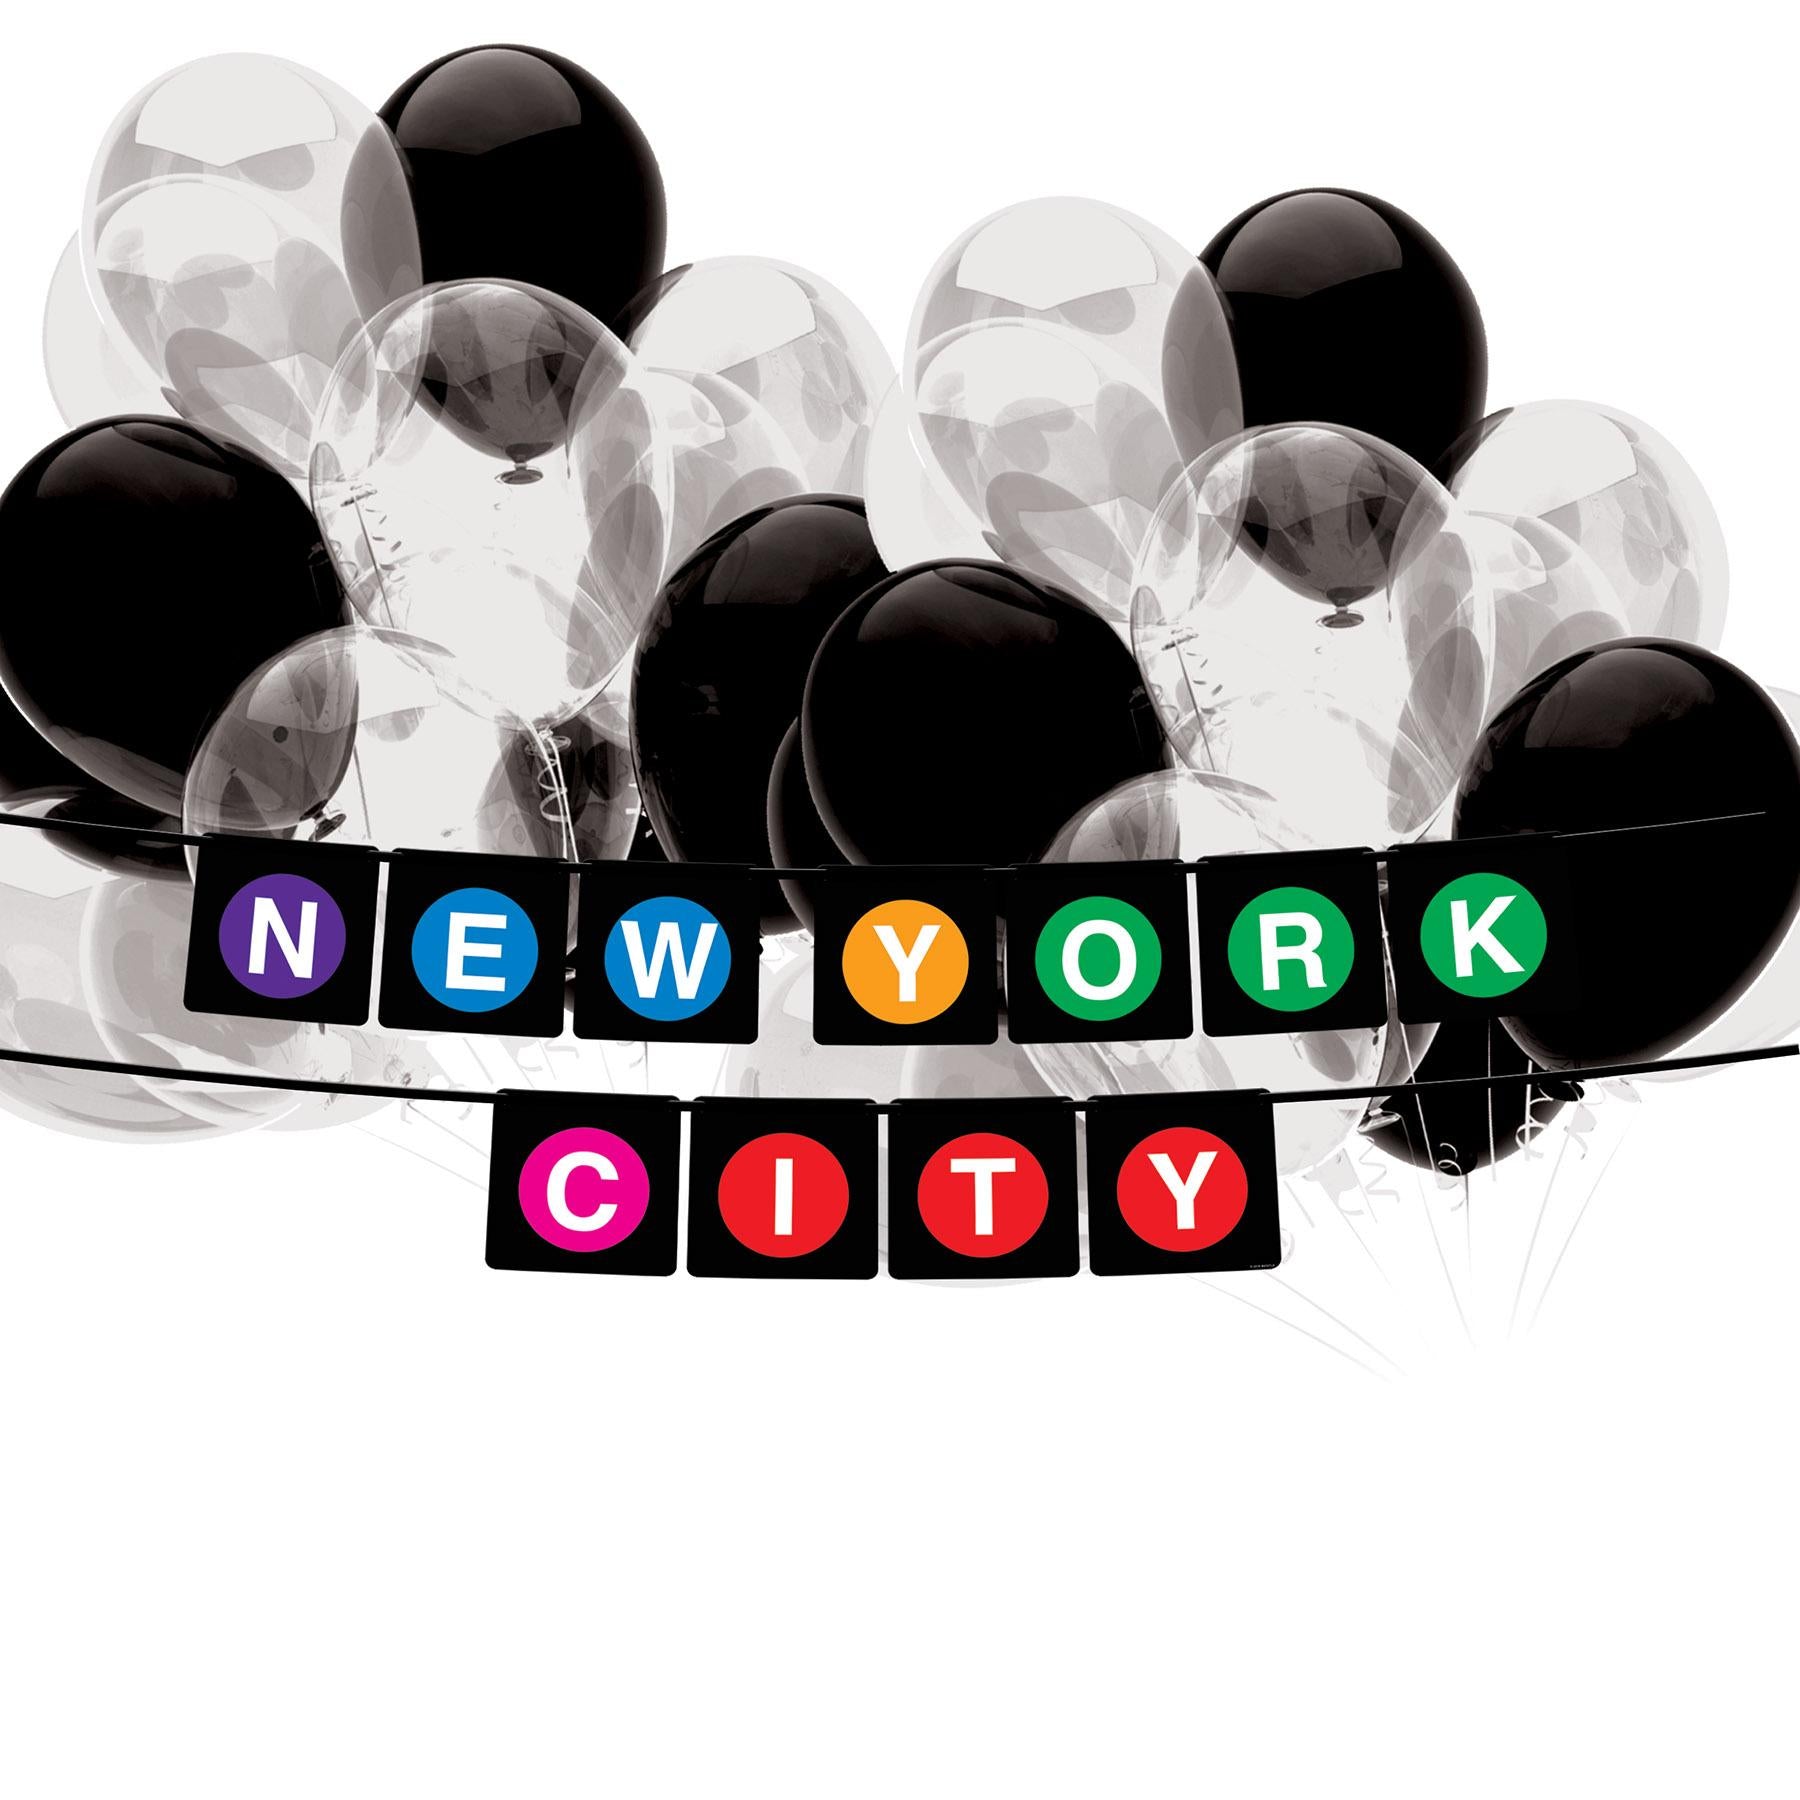 Beistle New York City Party Streamer